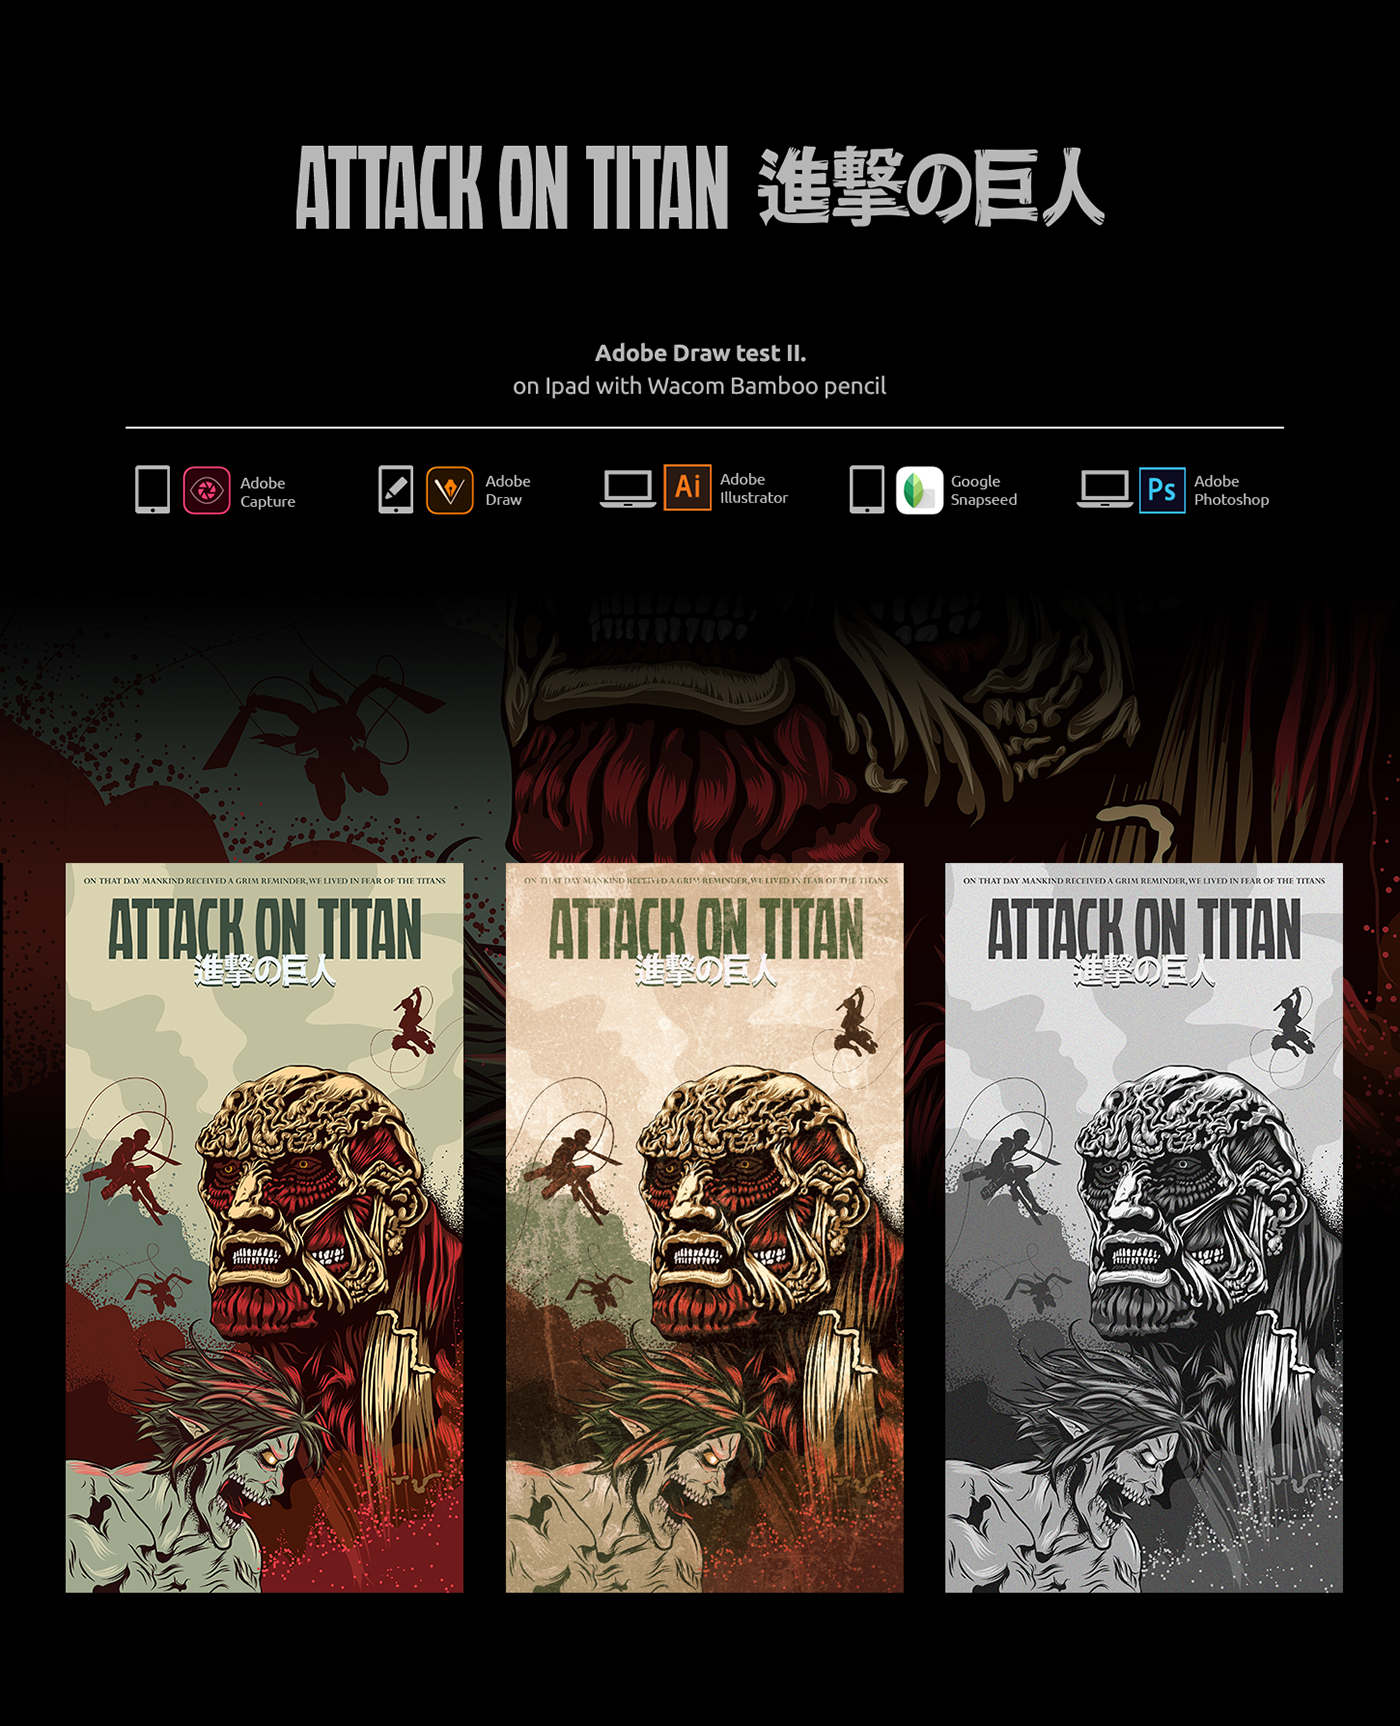 adobe draw movie poster movie poster Illustrator draw Attack Titan attack on titan iPad Wacom Bamboo bamboo pencil pen